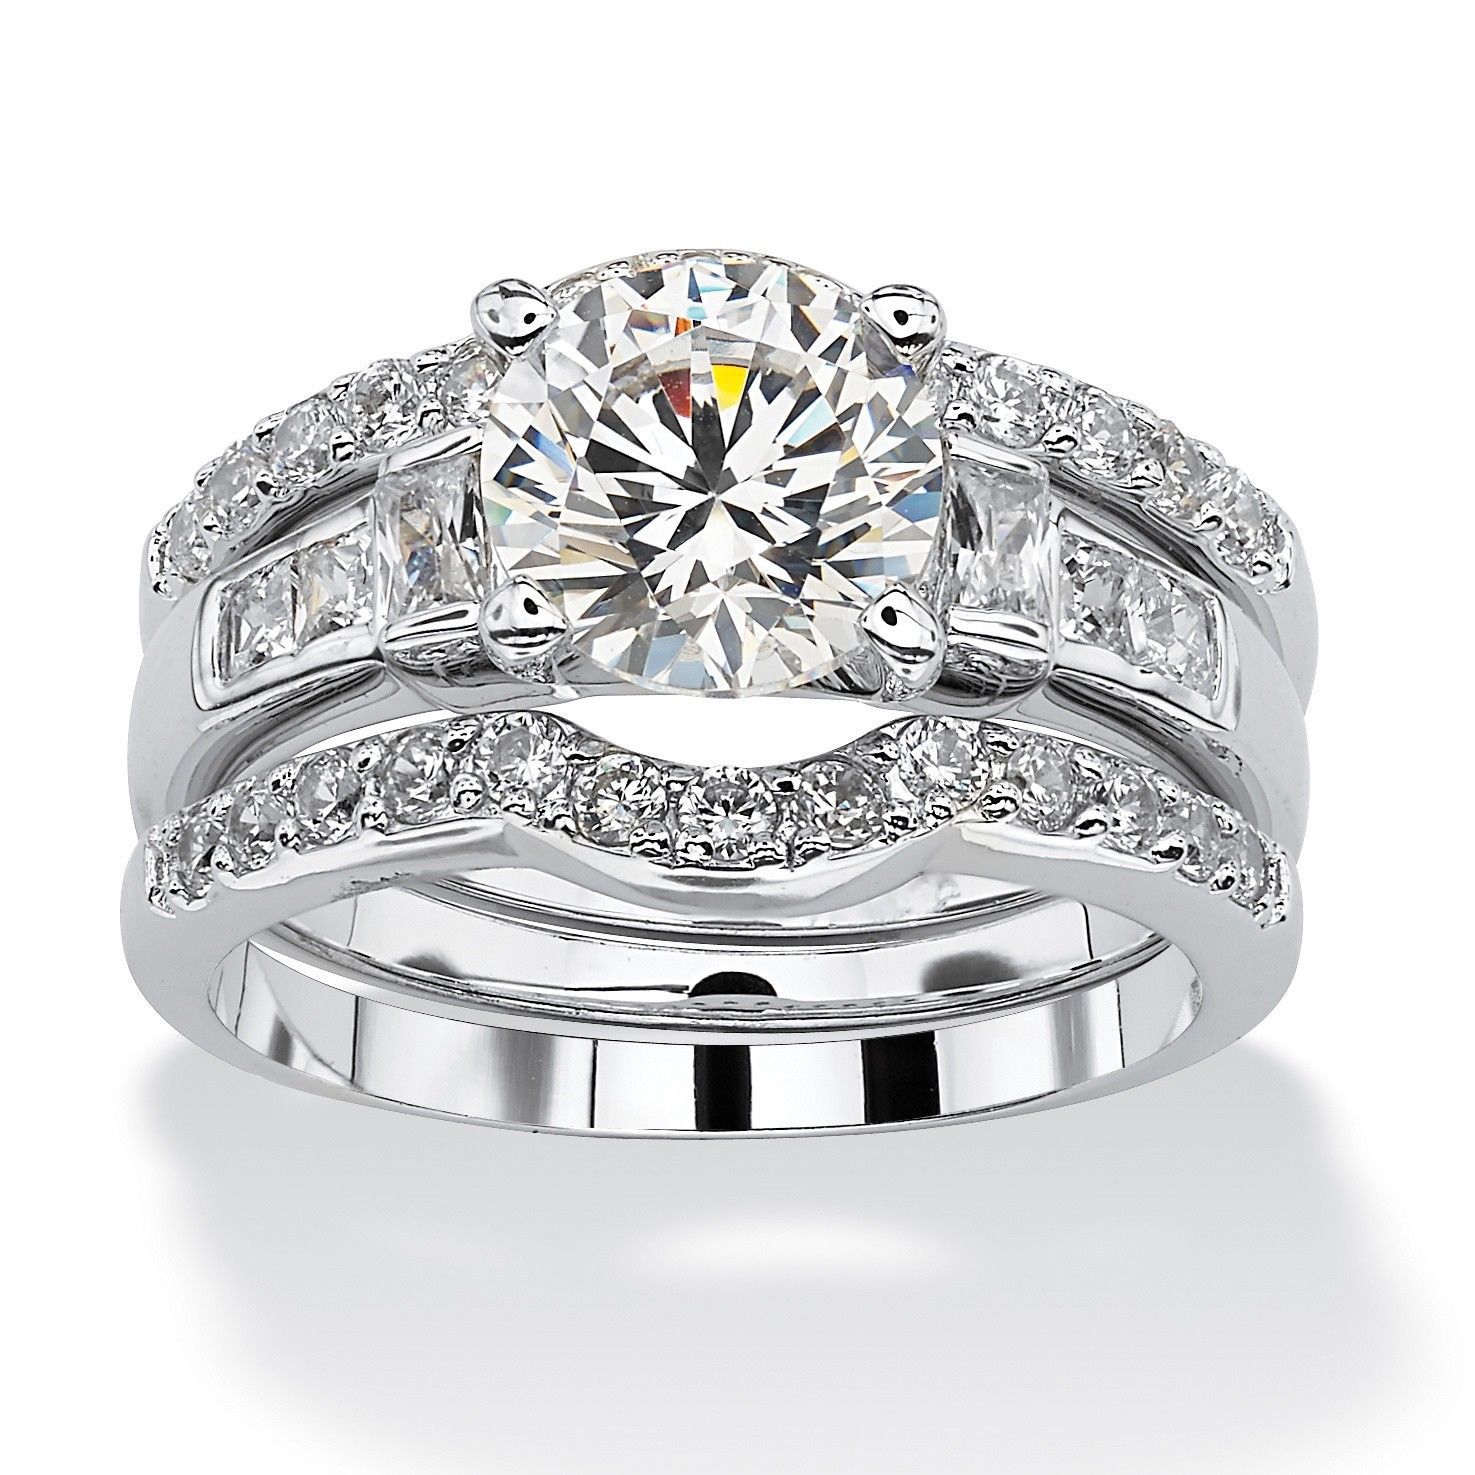 2.95 TCW CZ Platinum over Silver 3-Piece Bridal Ring Set - $47.99